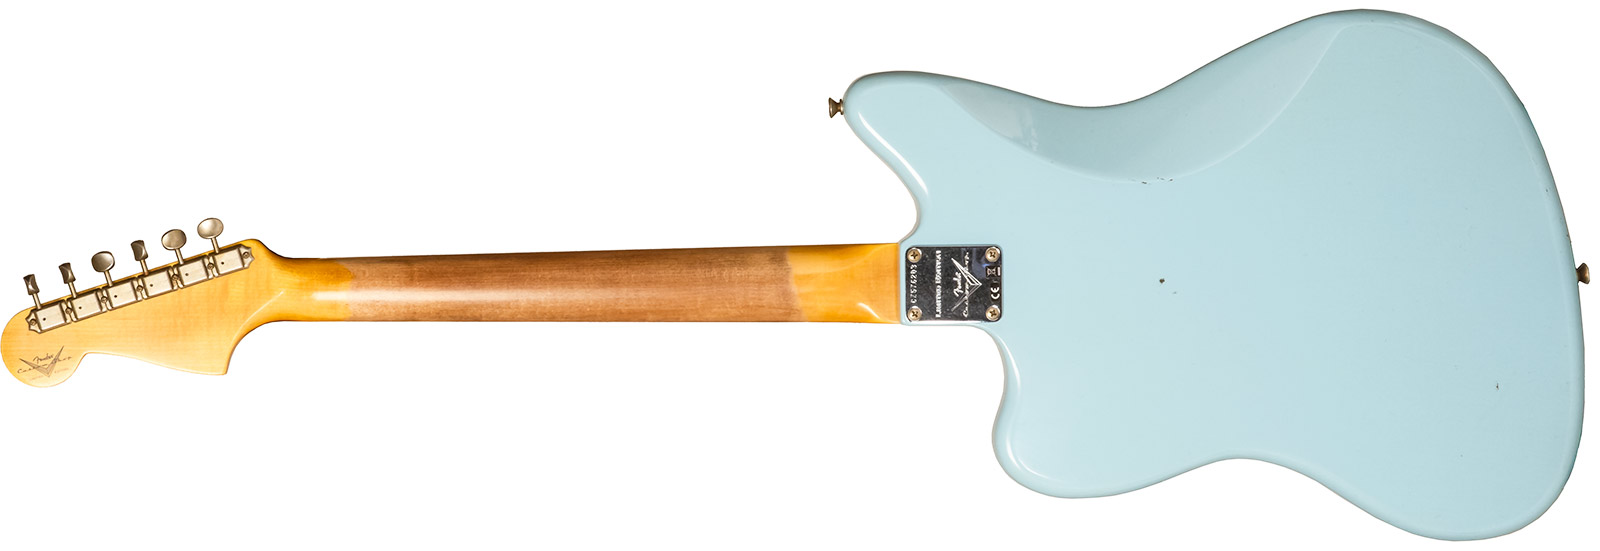 Fender Custom Shop Jazzmaster 1959 250k 2s Trem Rw #cz576203 - Journeyman Relic Aged Daphne Blue - Guitarra electrica retro rock - Variation 1